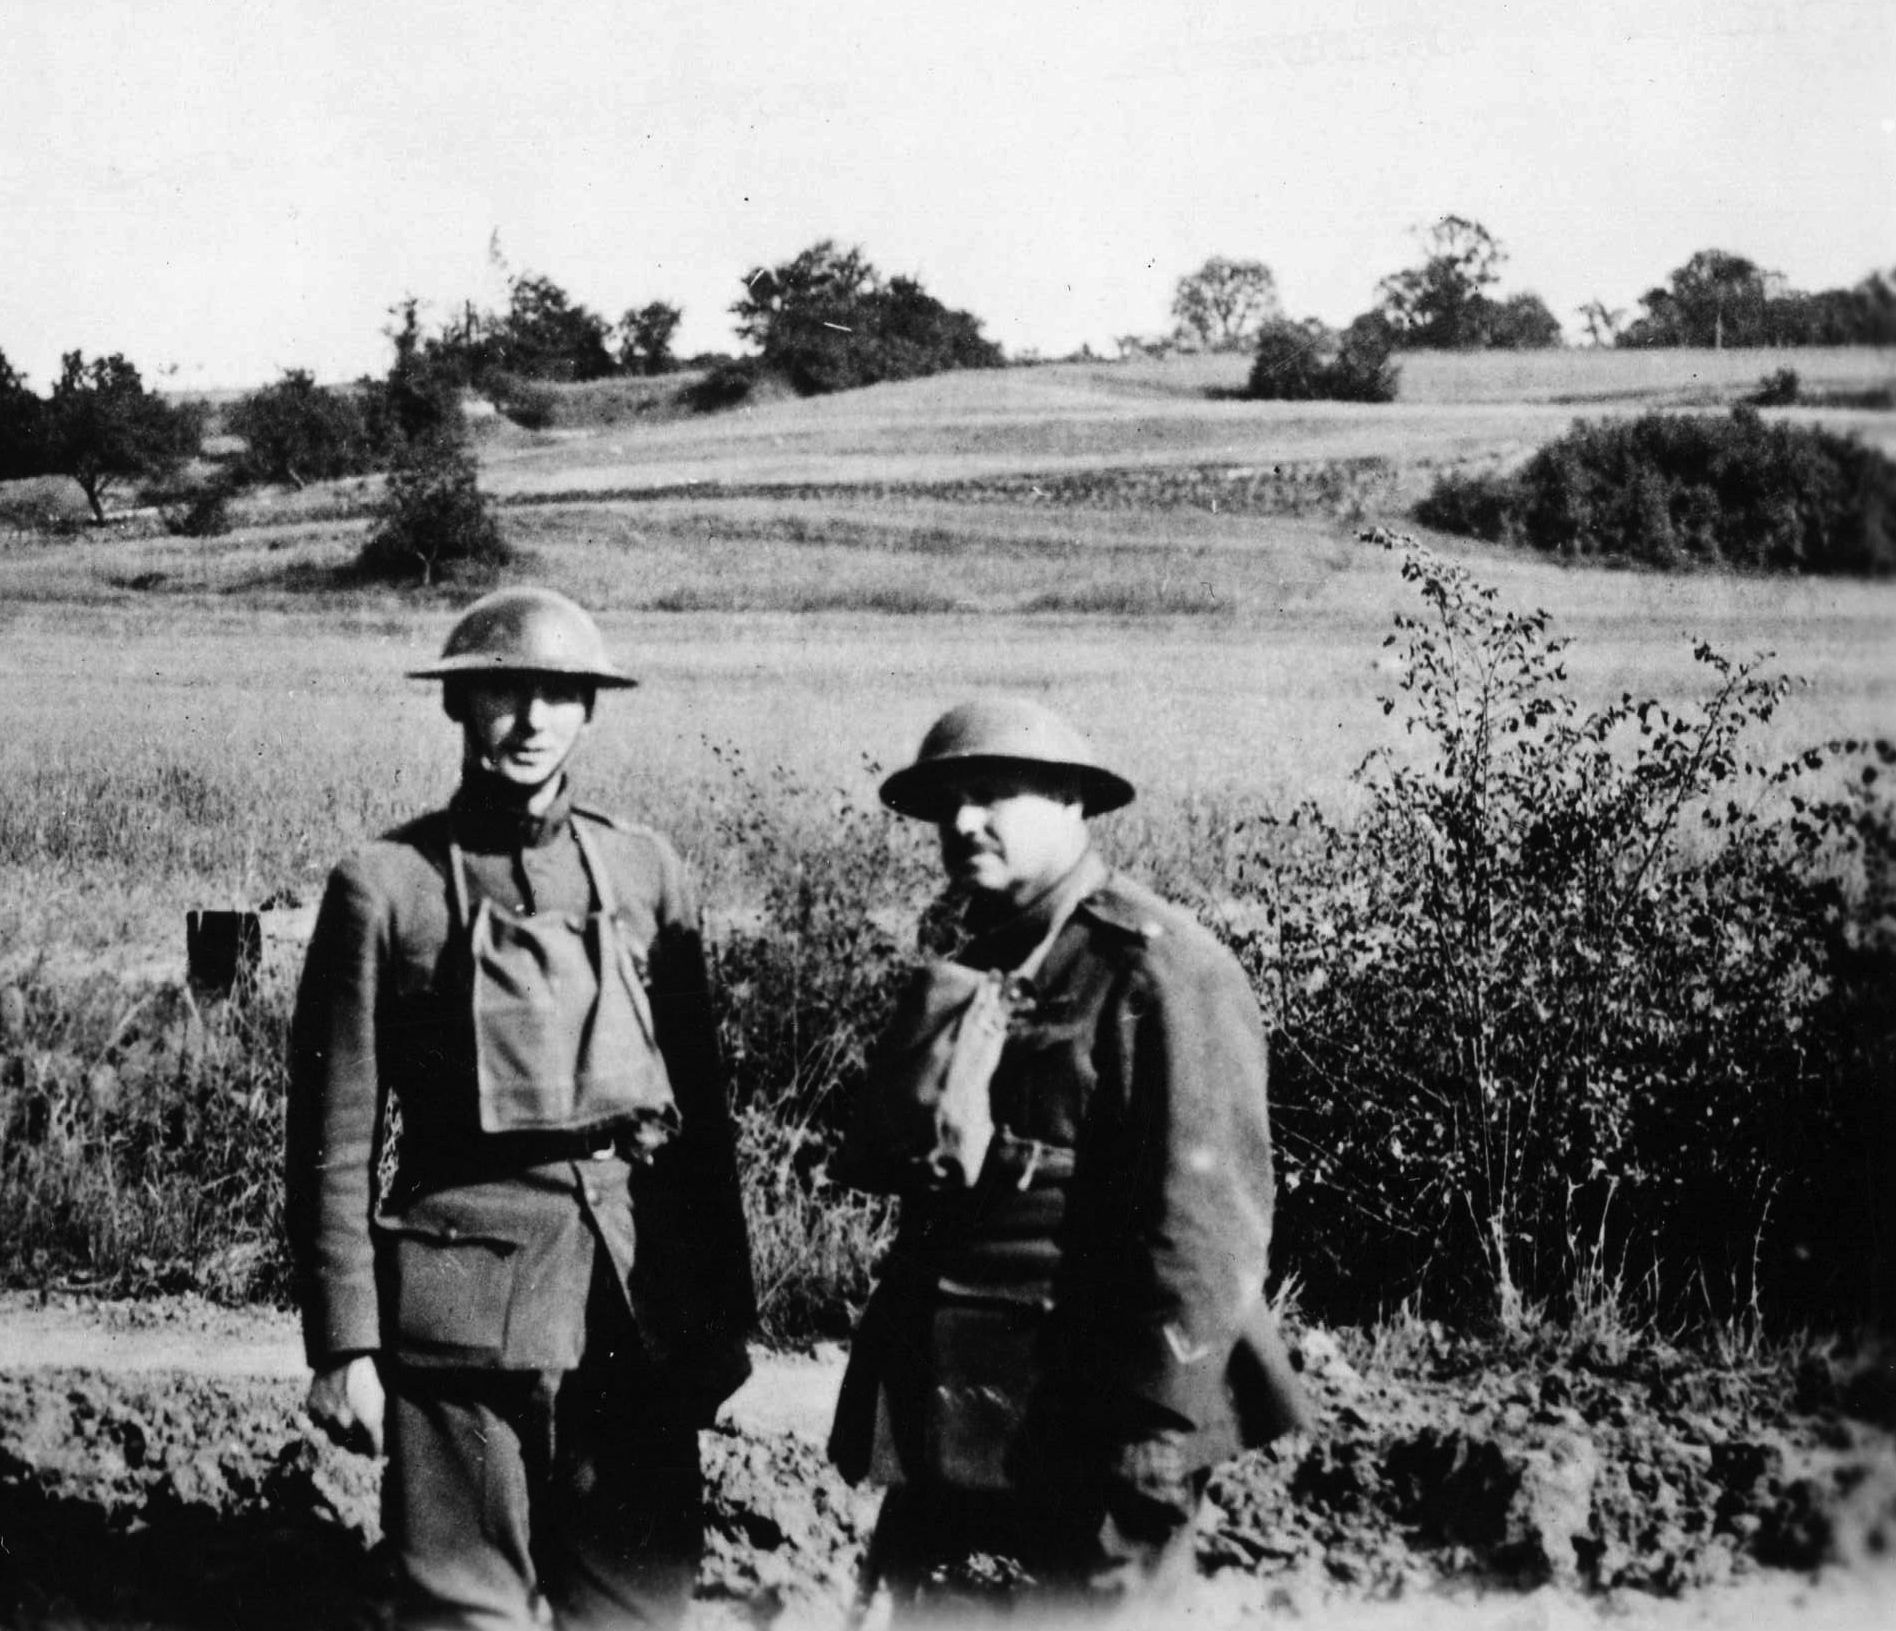 Helmeted war correspondents at Belleau Wood after the battle.